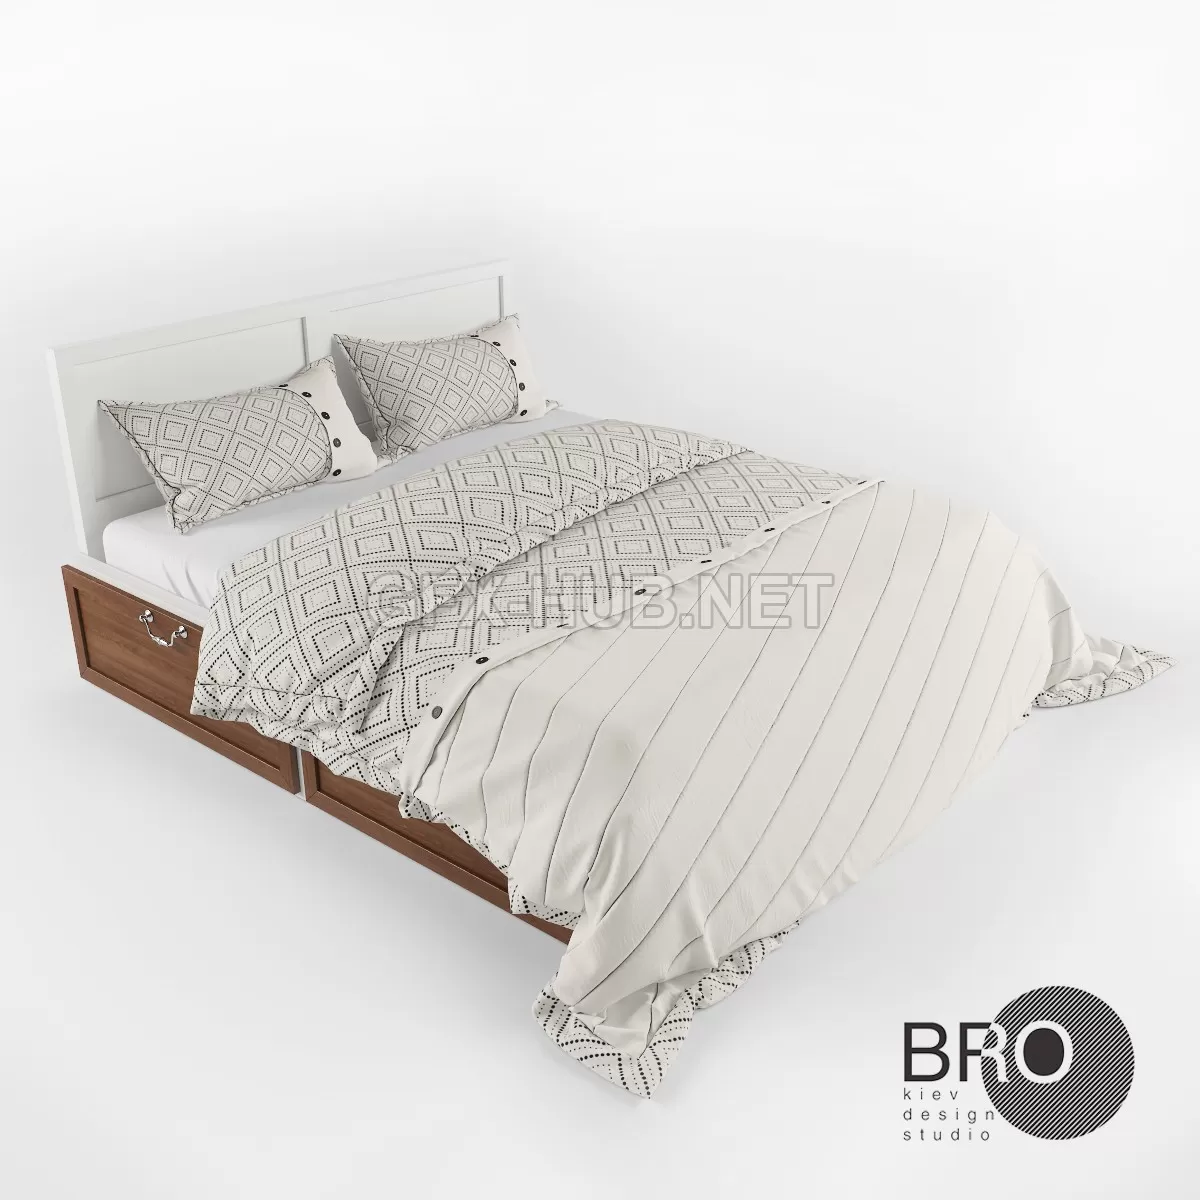 BED – Bedding from BRO Design Studio